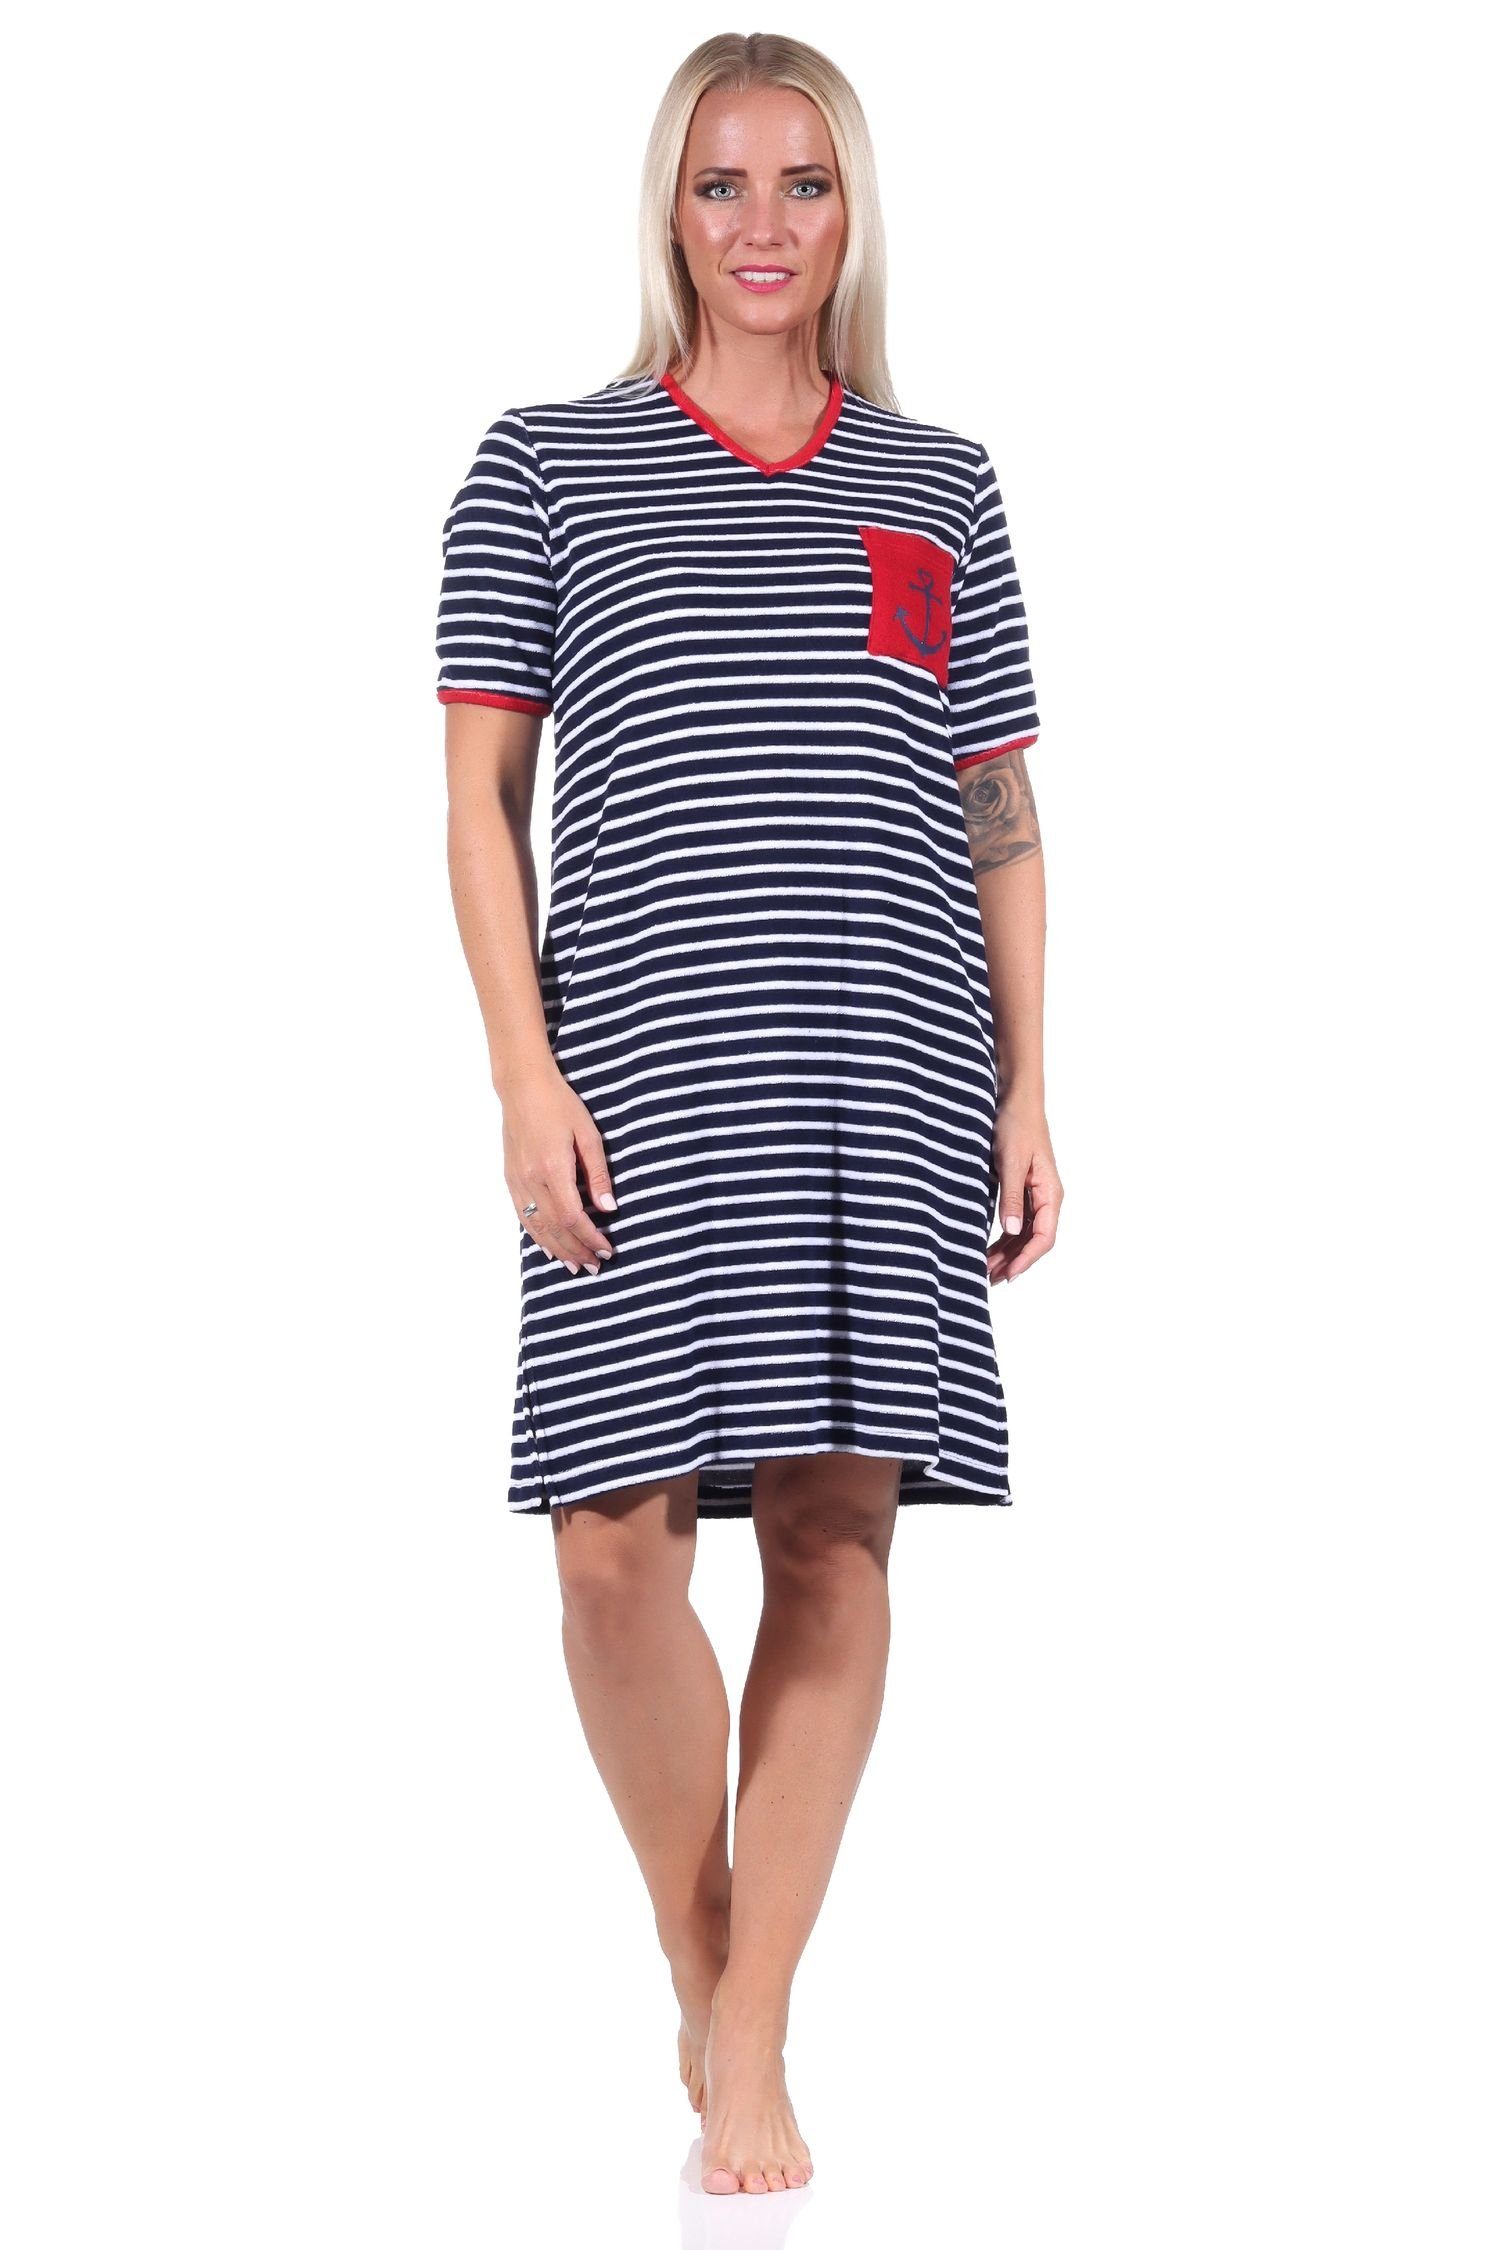 Normann Nachthemd Maritimes kurzarm Frottee Motiv mit Damen Strandkleid Nachthemd Anker marine